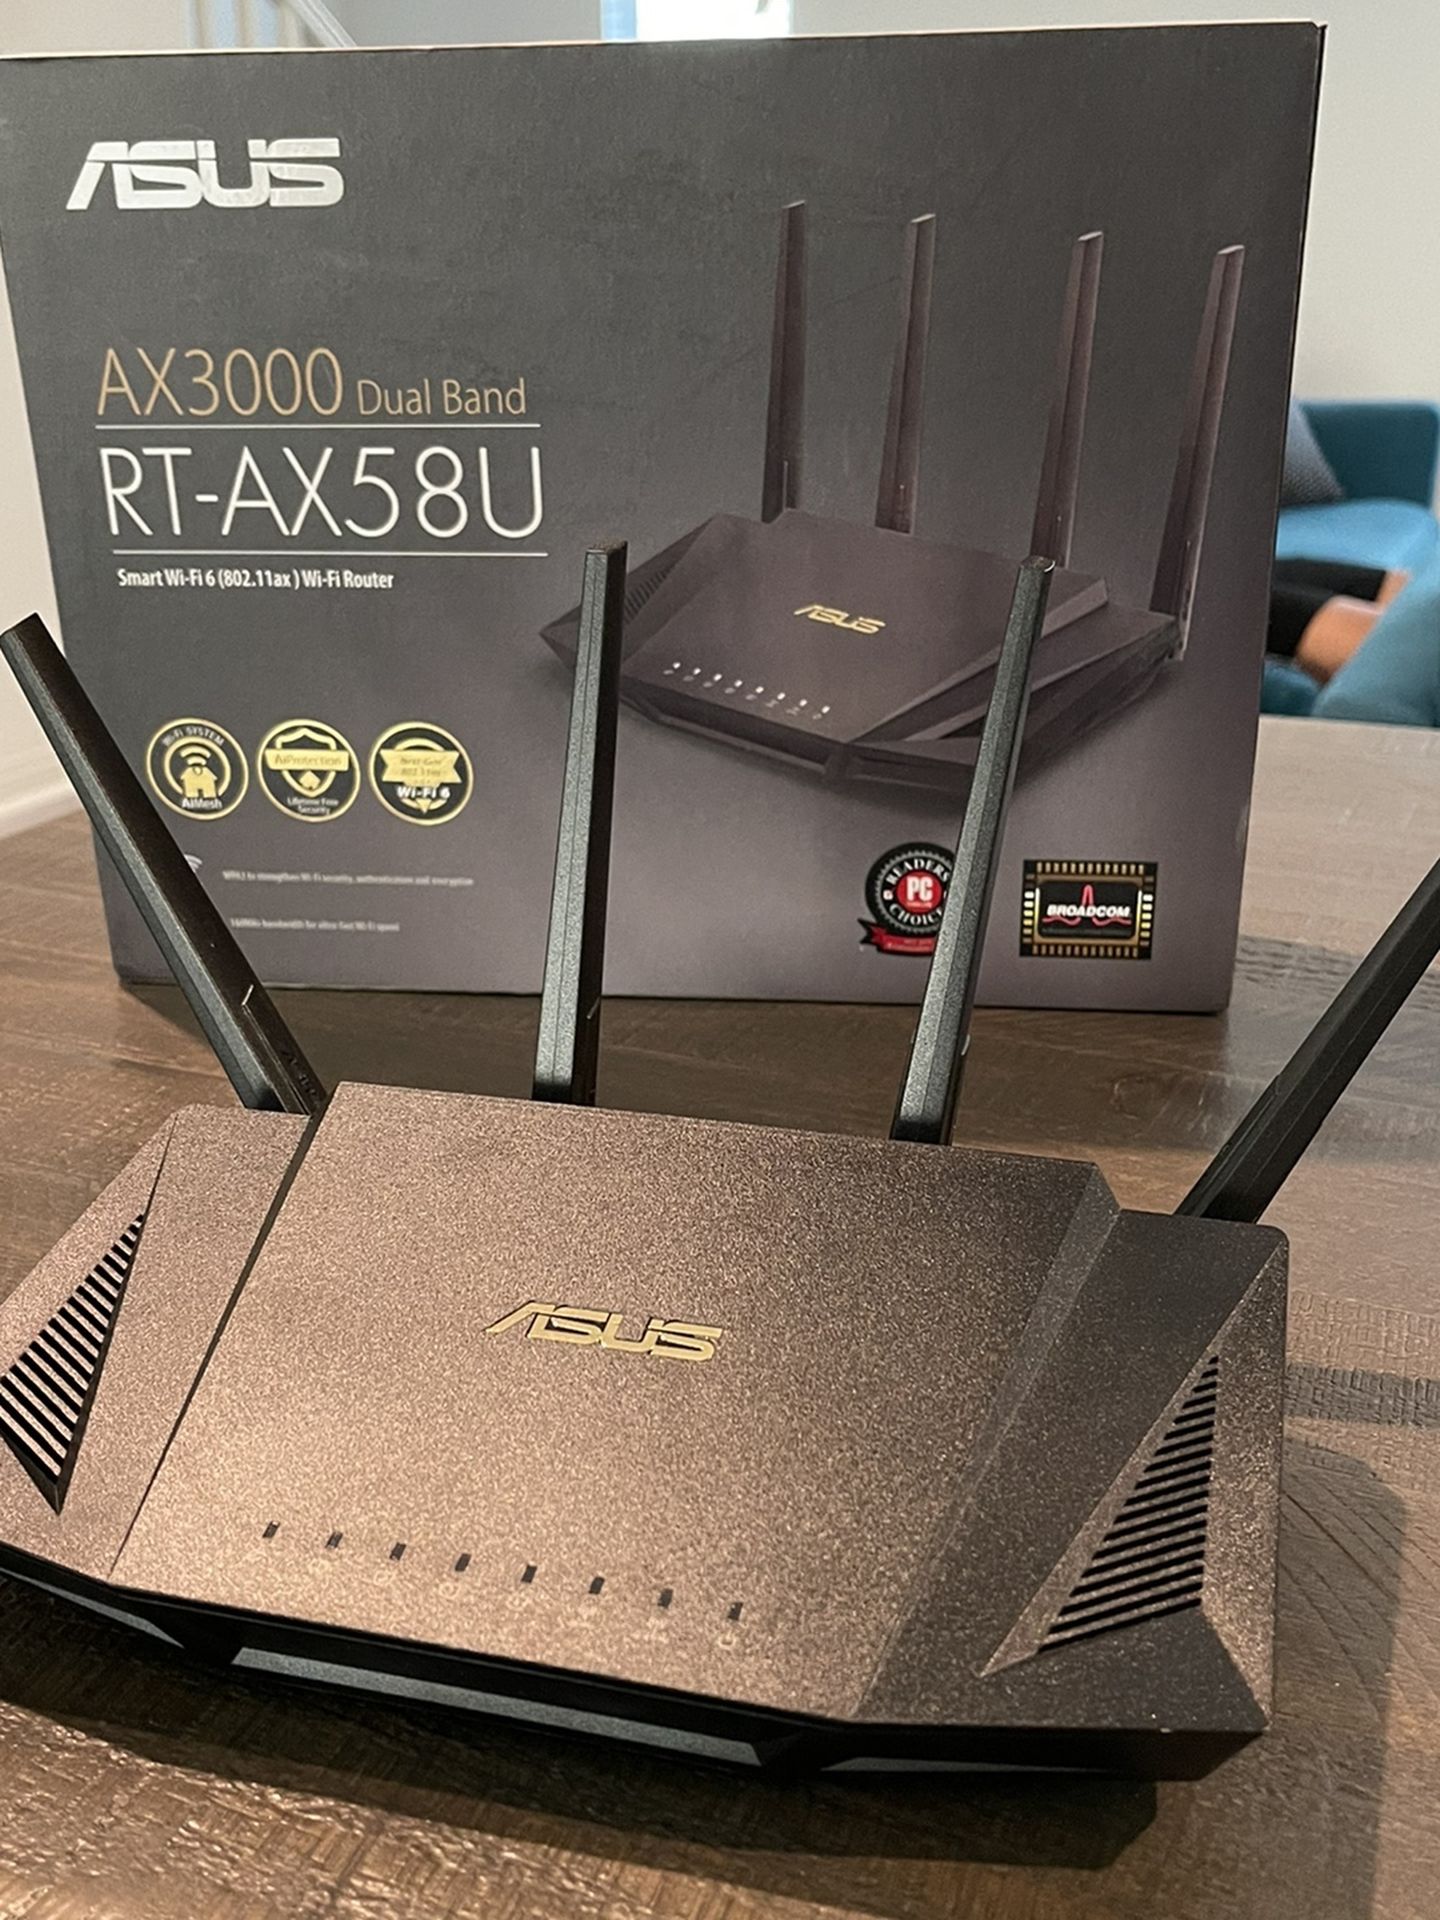 Asus AX3000 RT-AX58U Router